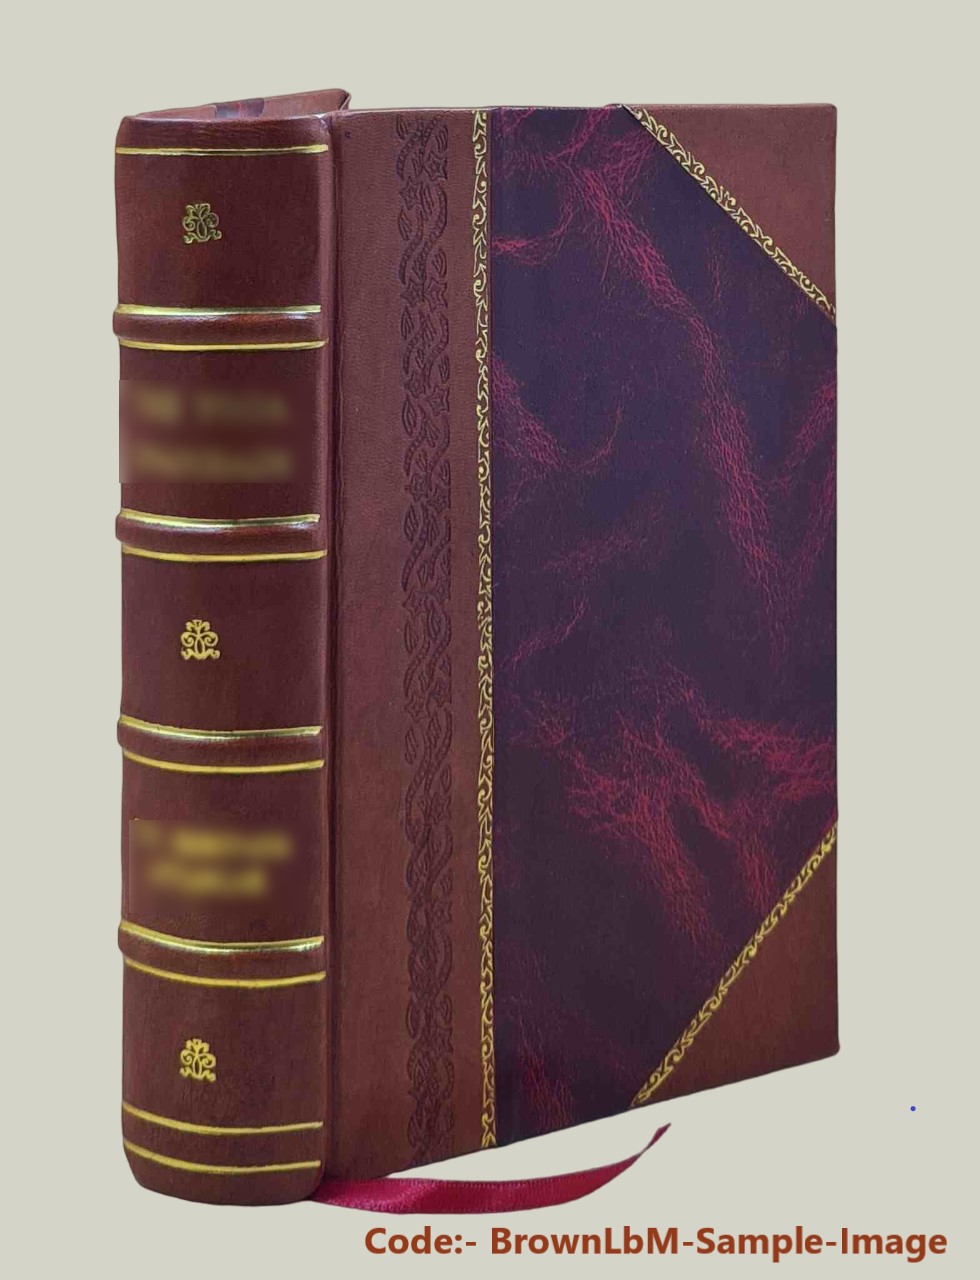 Insula sanctorum et doctorum; or, Ireland's ancient schools and scholars, by John Healy. 1908 [Leather Bound] - Healy, John, abp., -.